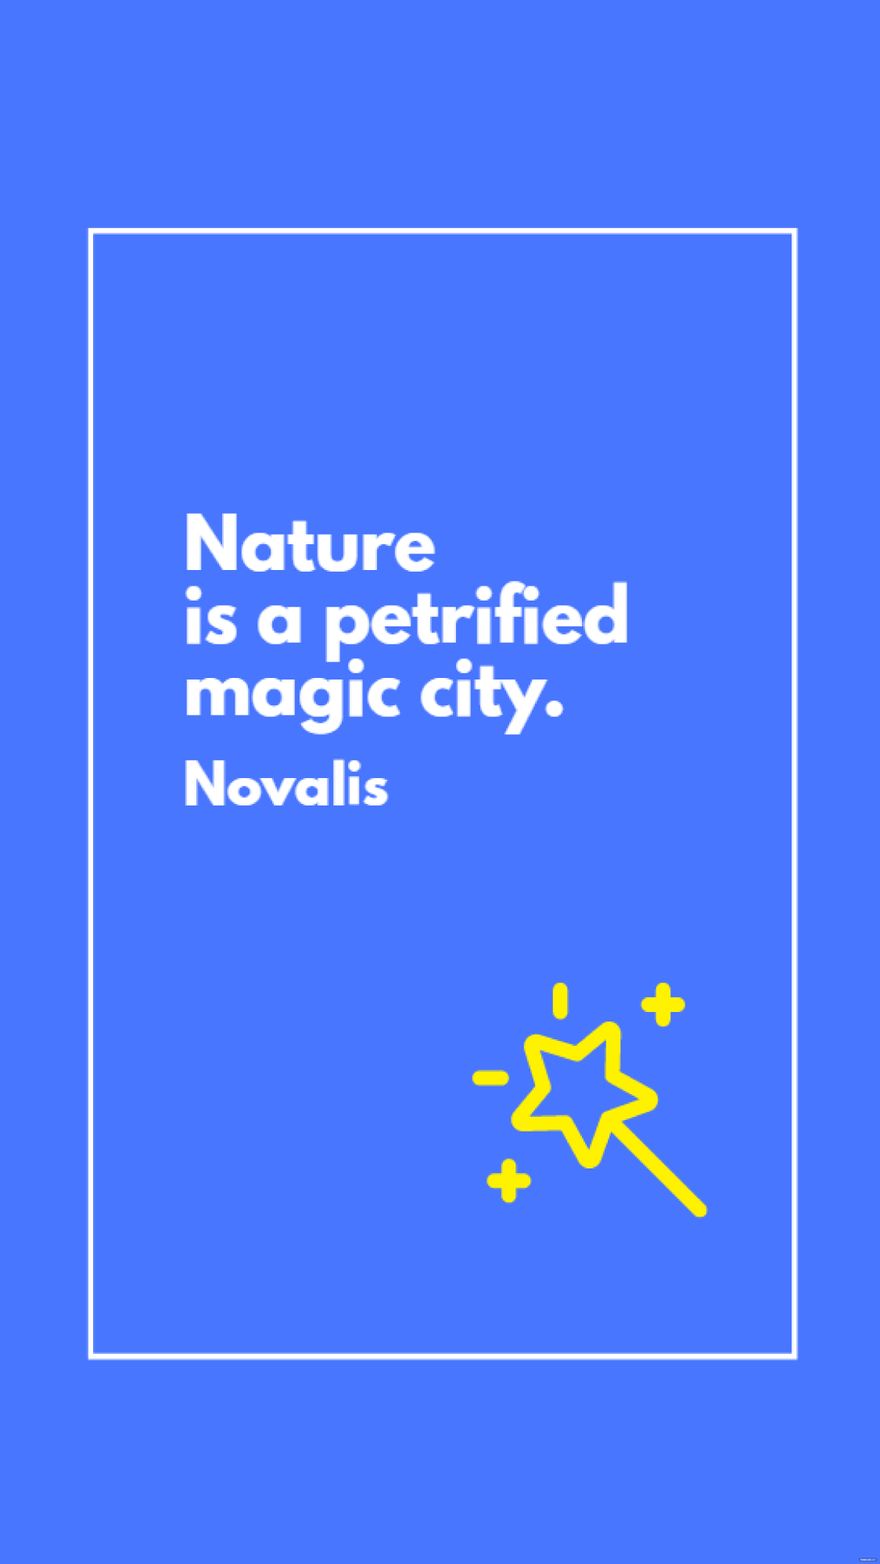 Novalis - Nature is a petrified magic city.